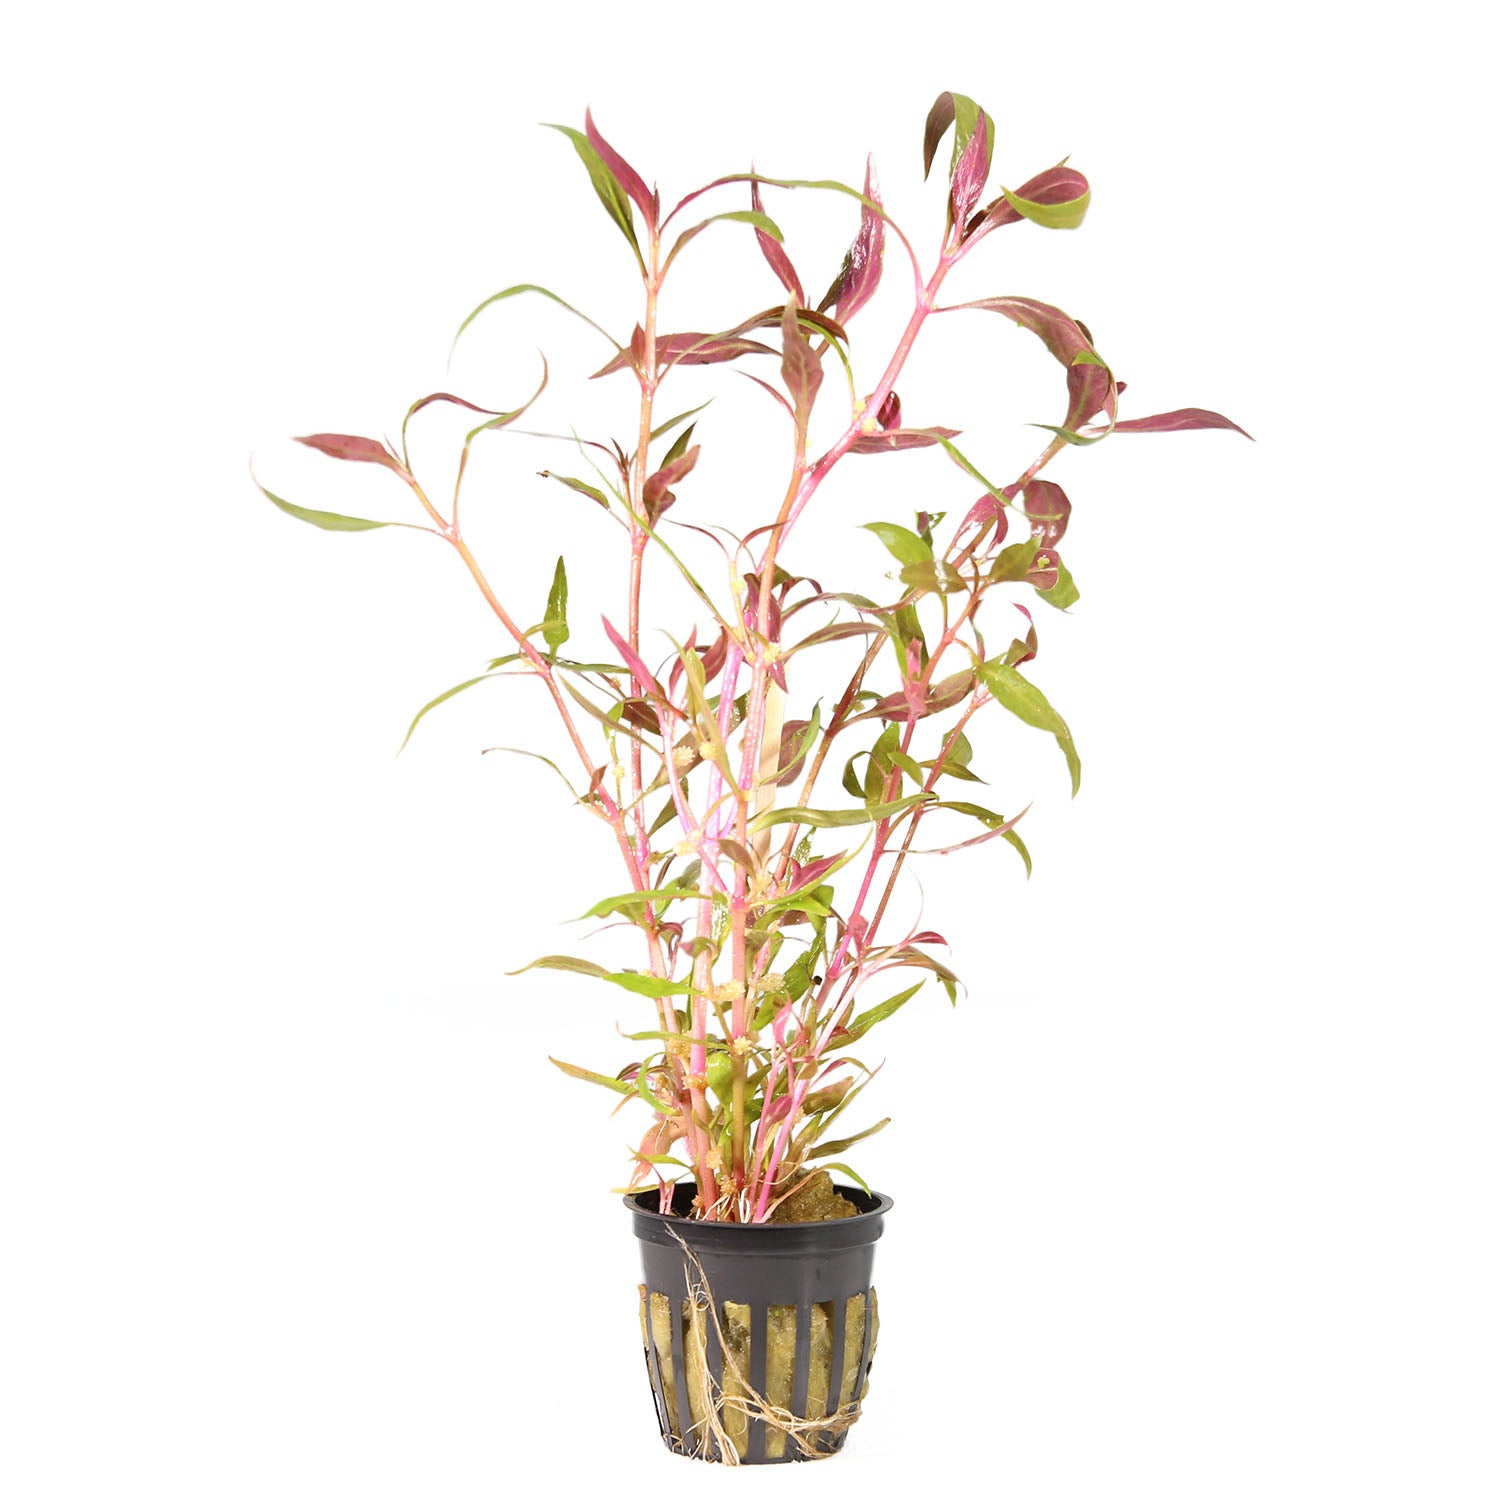 Alternanthera Reineckii 'roseafolia' Potted Plant